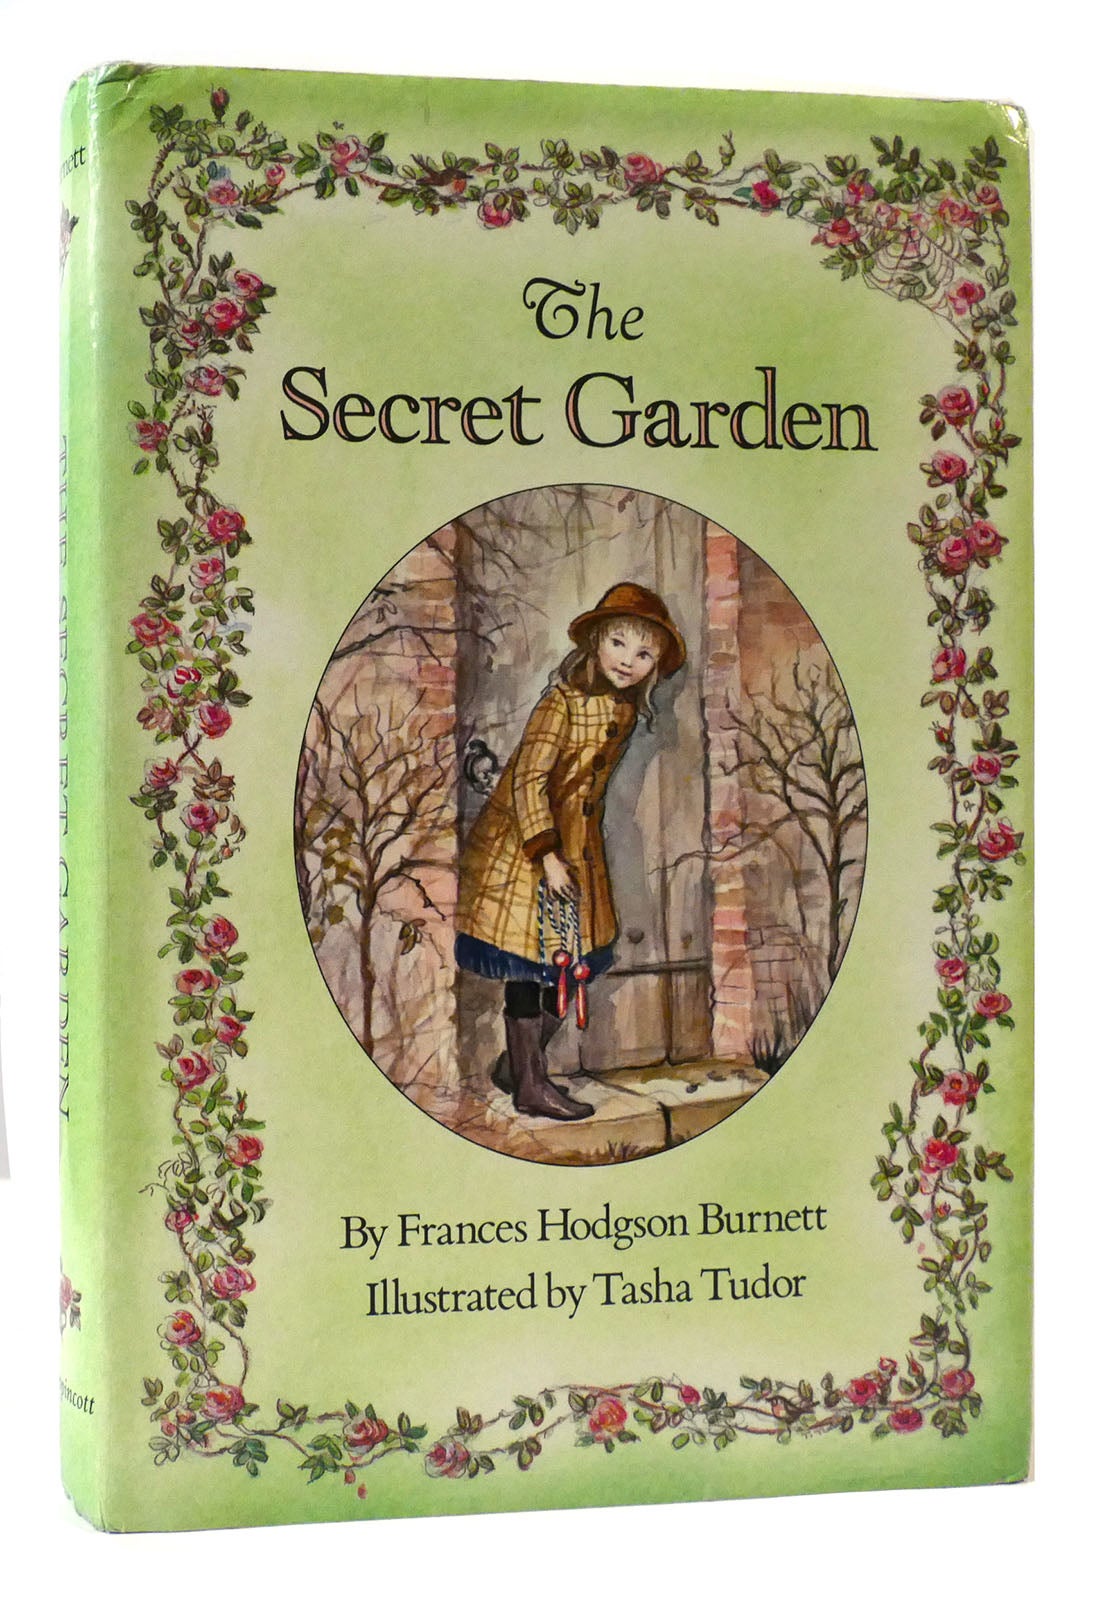 the secret garden original book cover